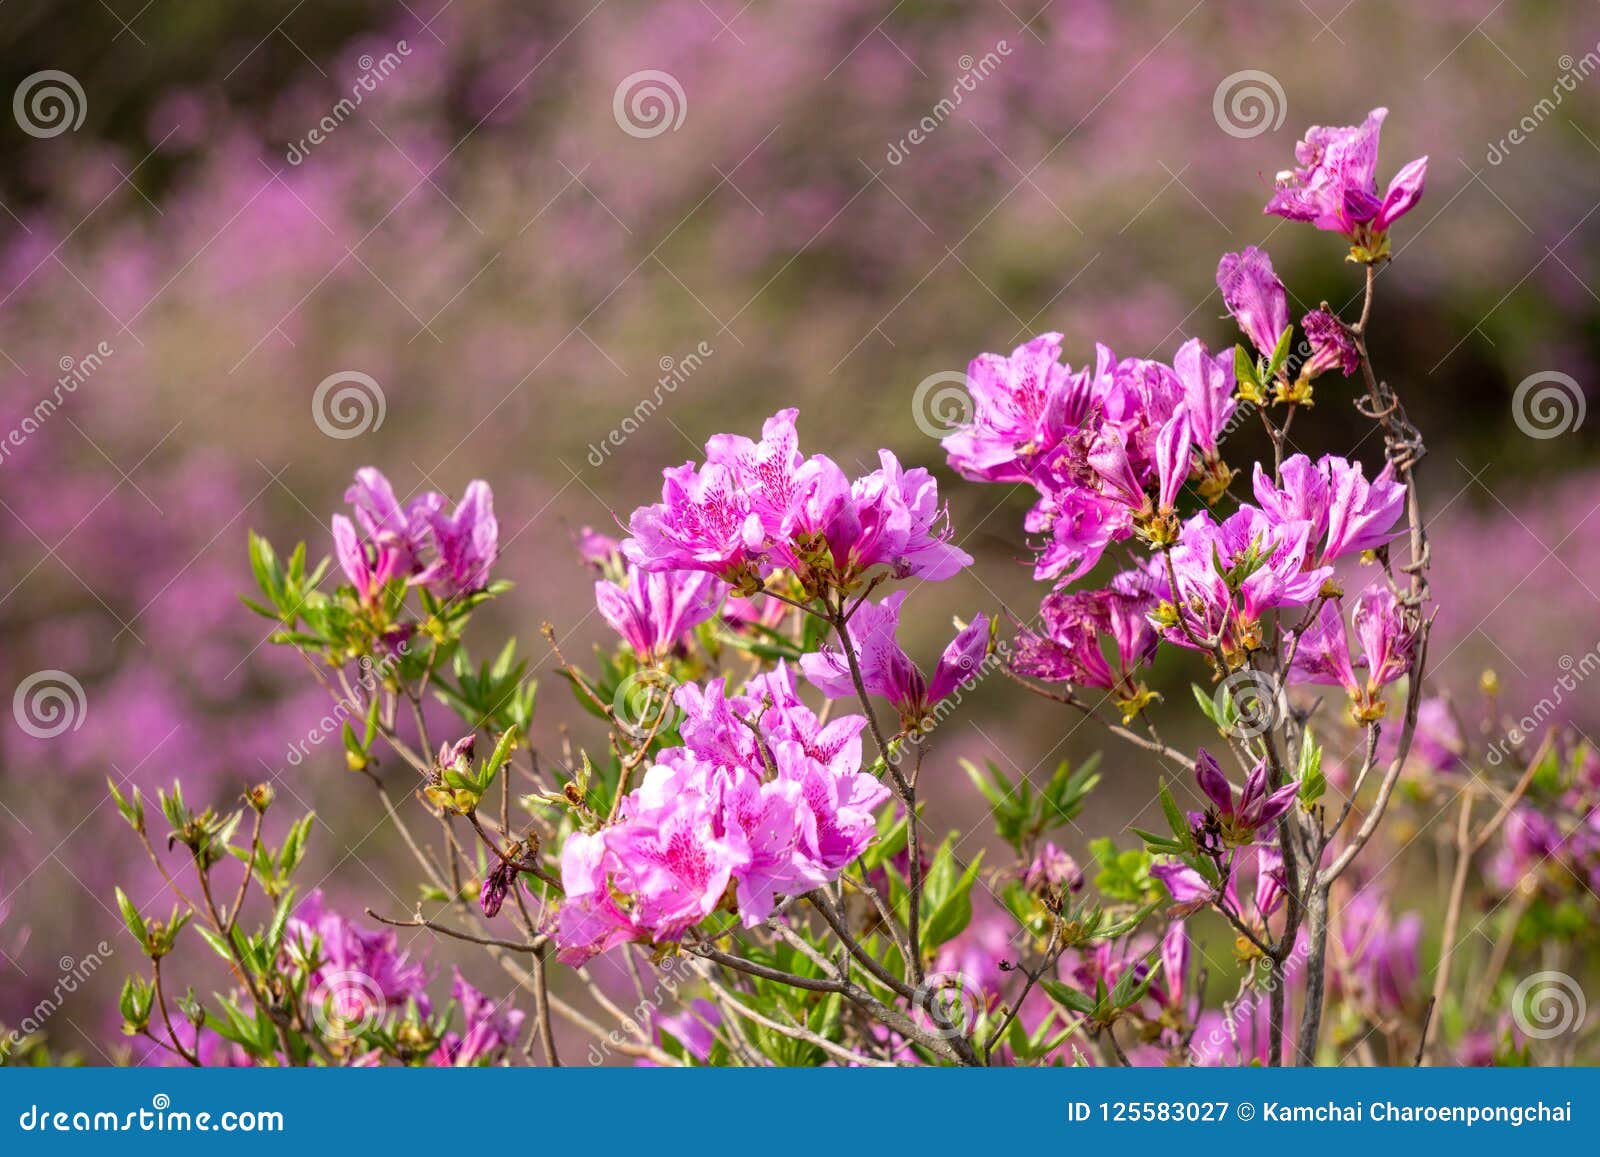 pink royal azalea flower or cheoljjuk bloom around the hillside in hwangmaesan country park